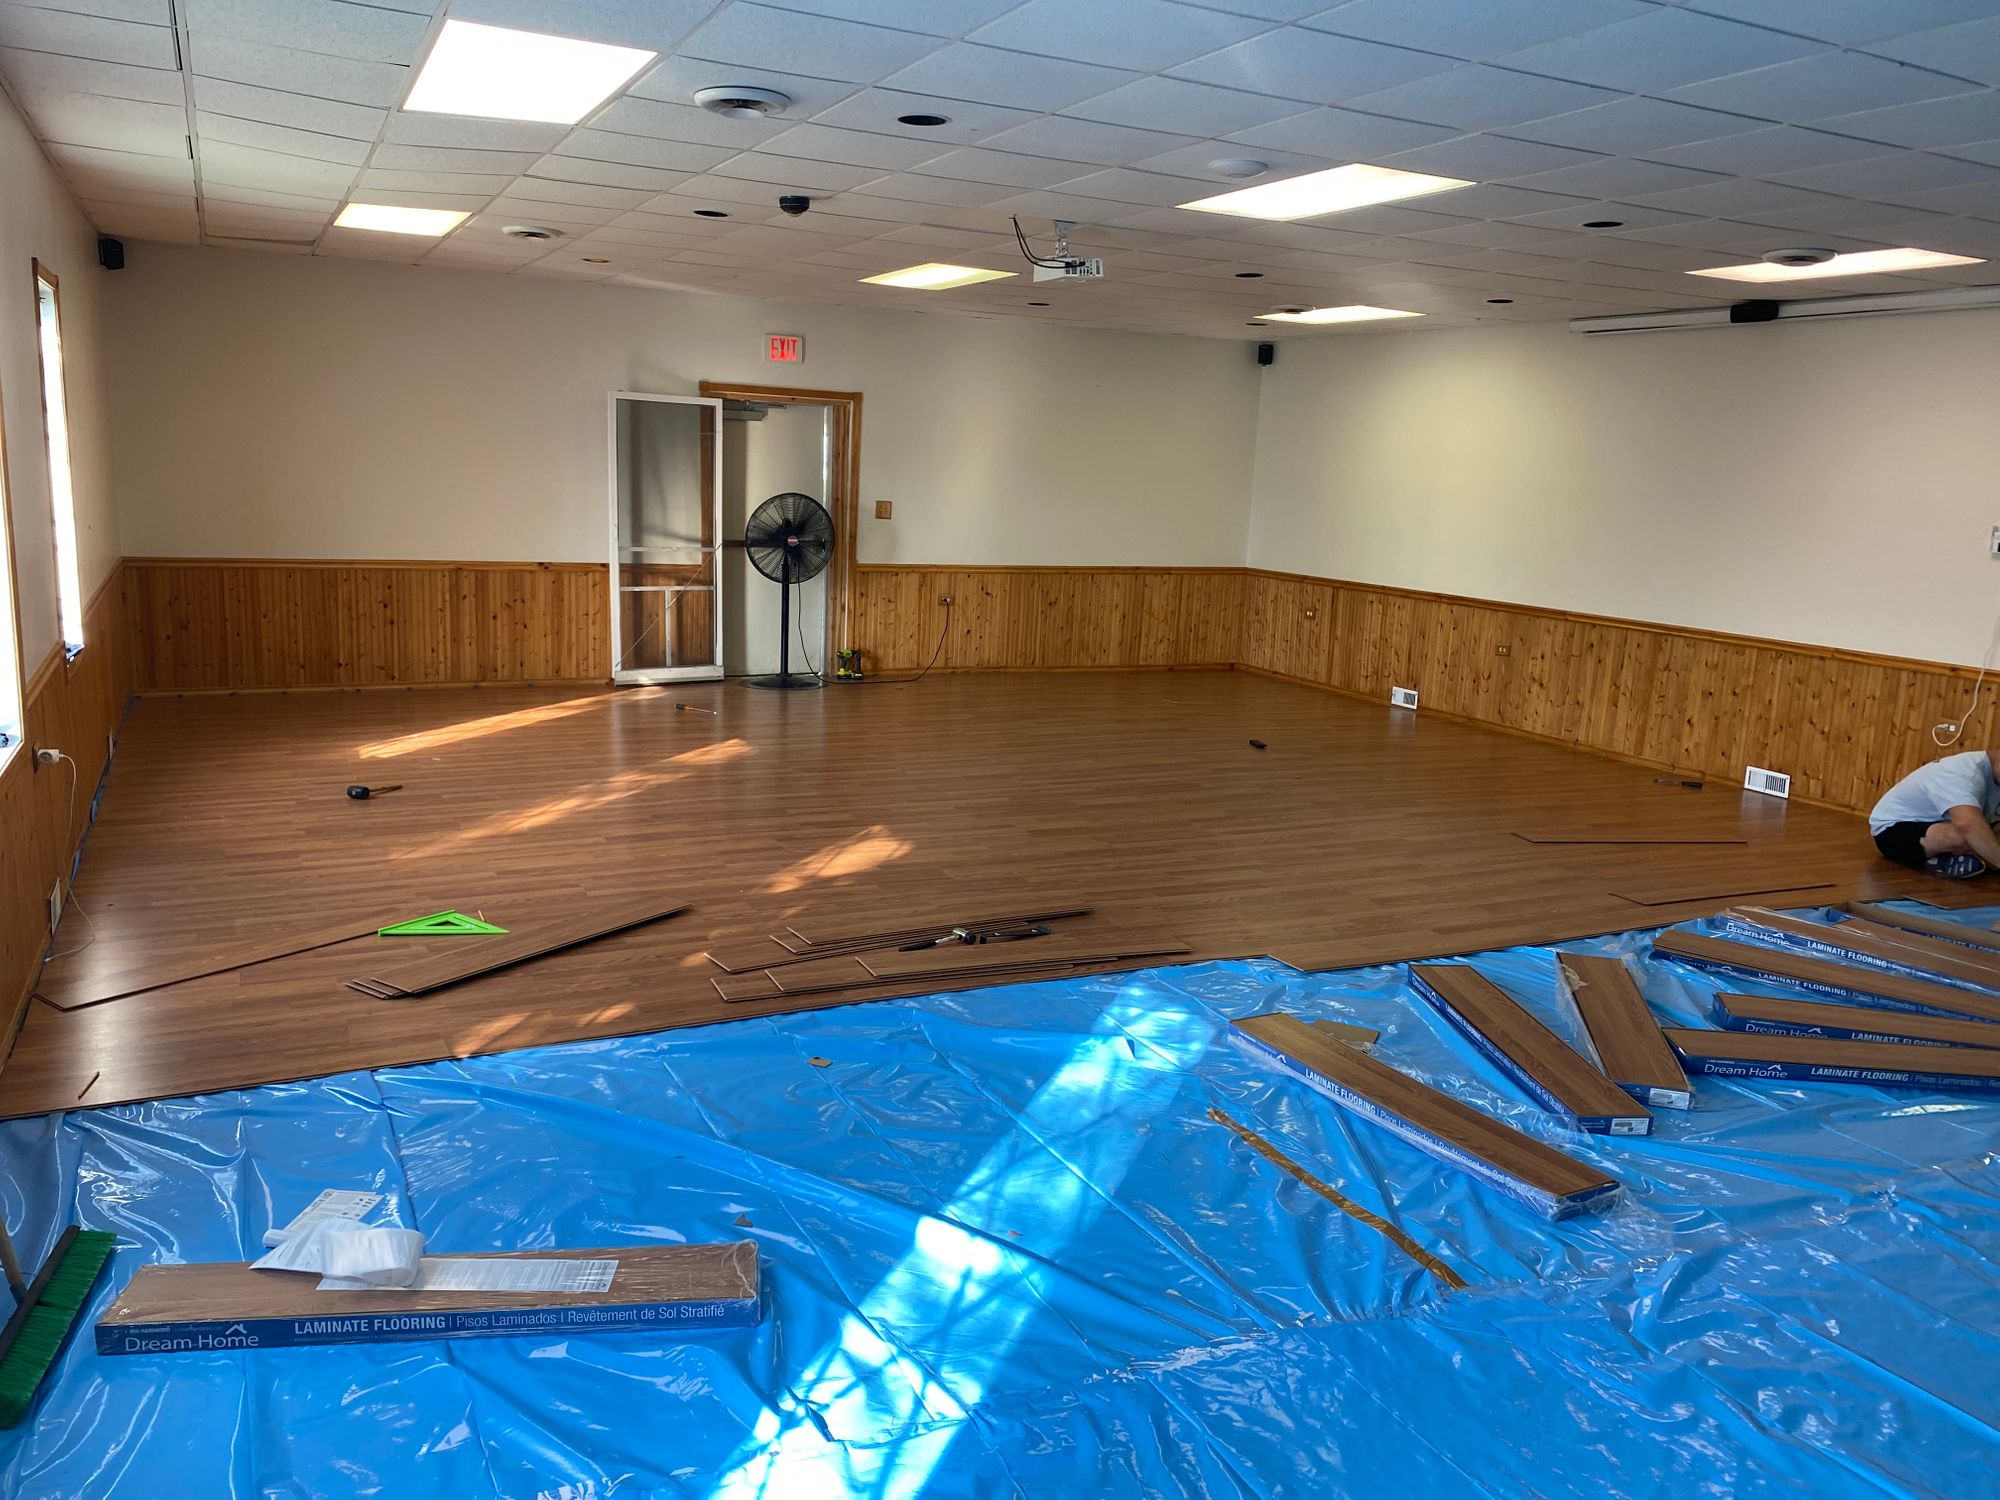 Community Center flooring redone.